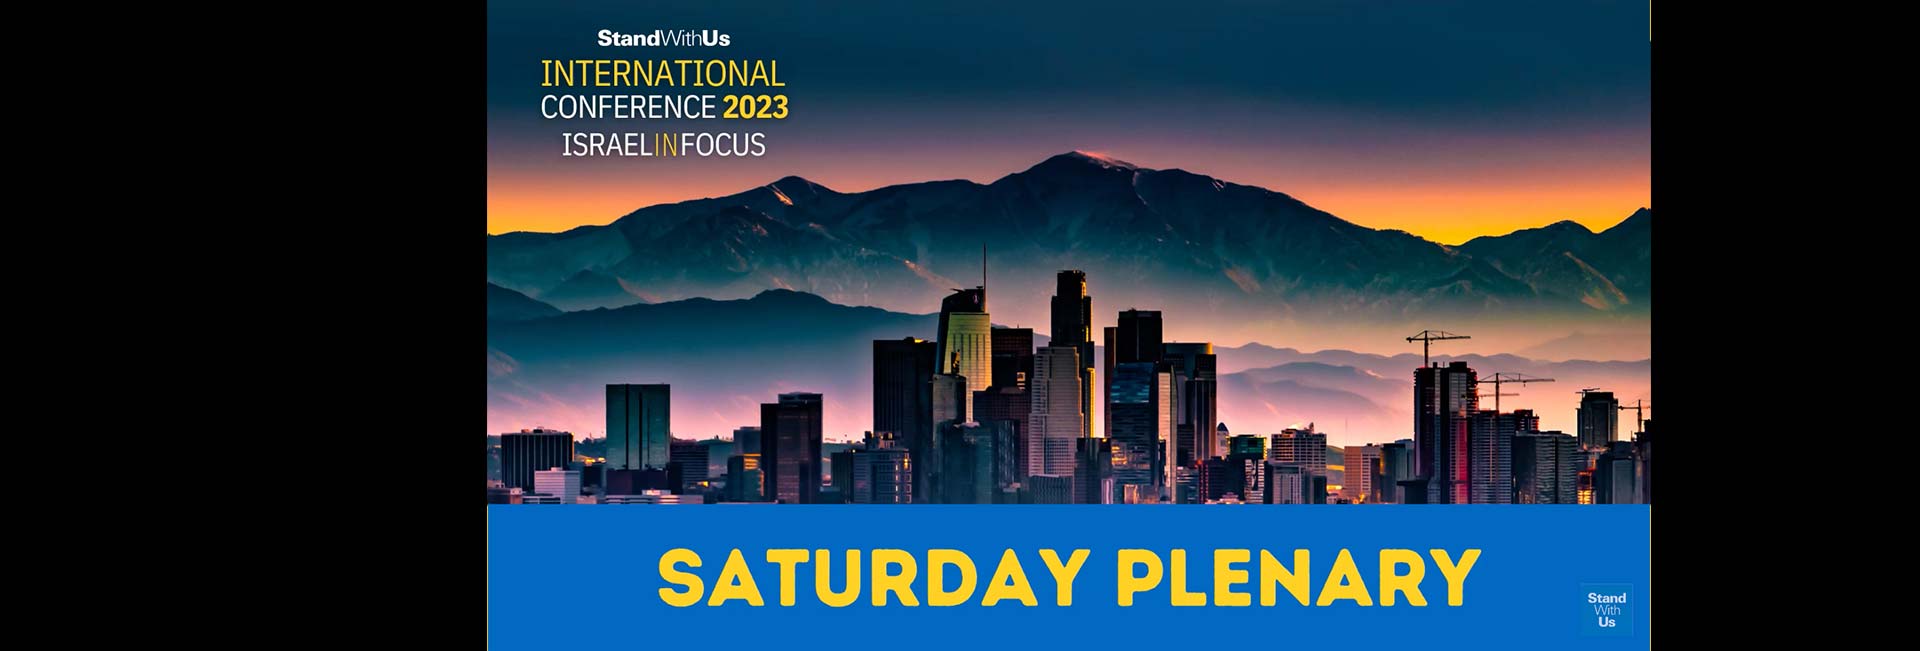 StandWithUs International Conference 2023: Saturday Plenary